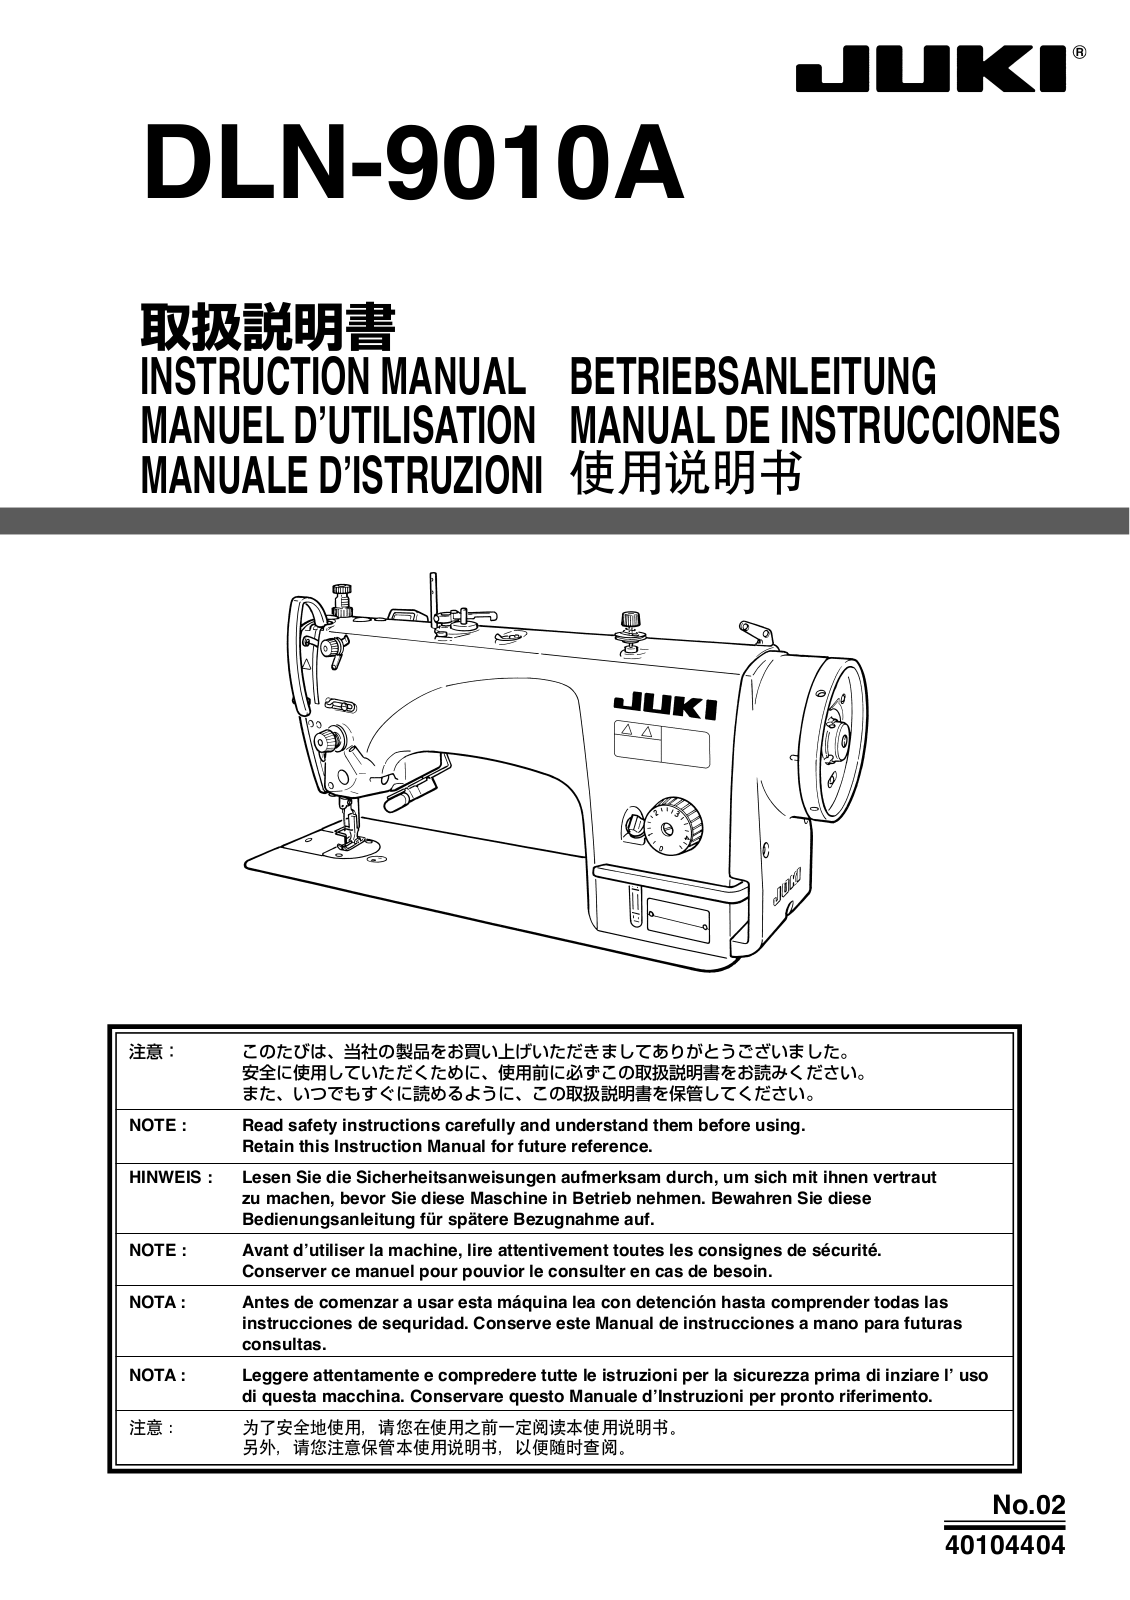 JUKI DLN-9010A Instruction Manual